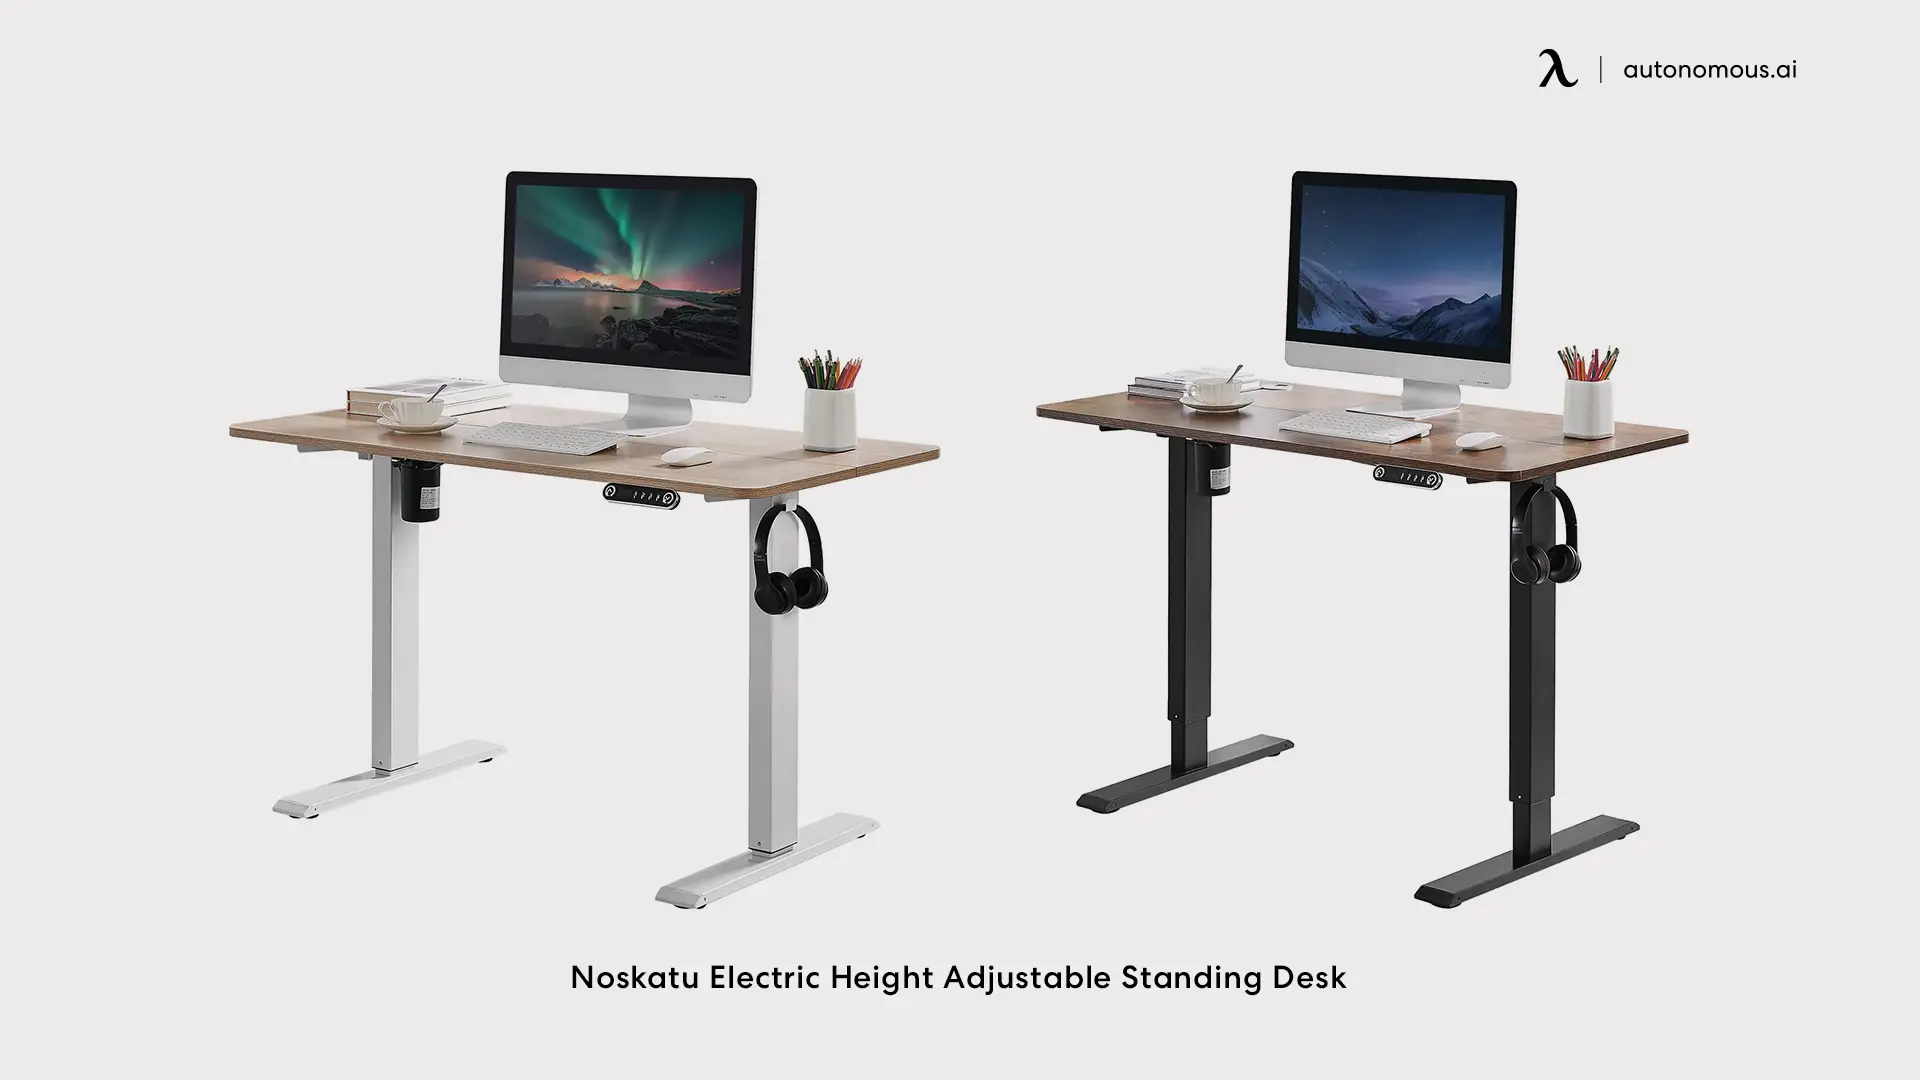 Noskatu Electric Height Adjustable Standing Desk